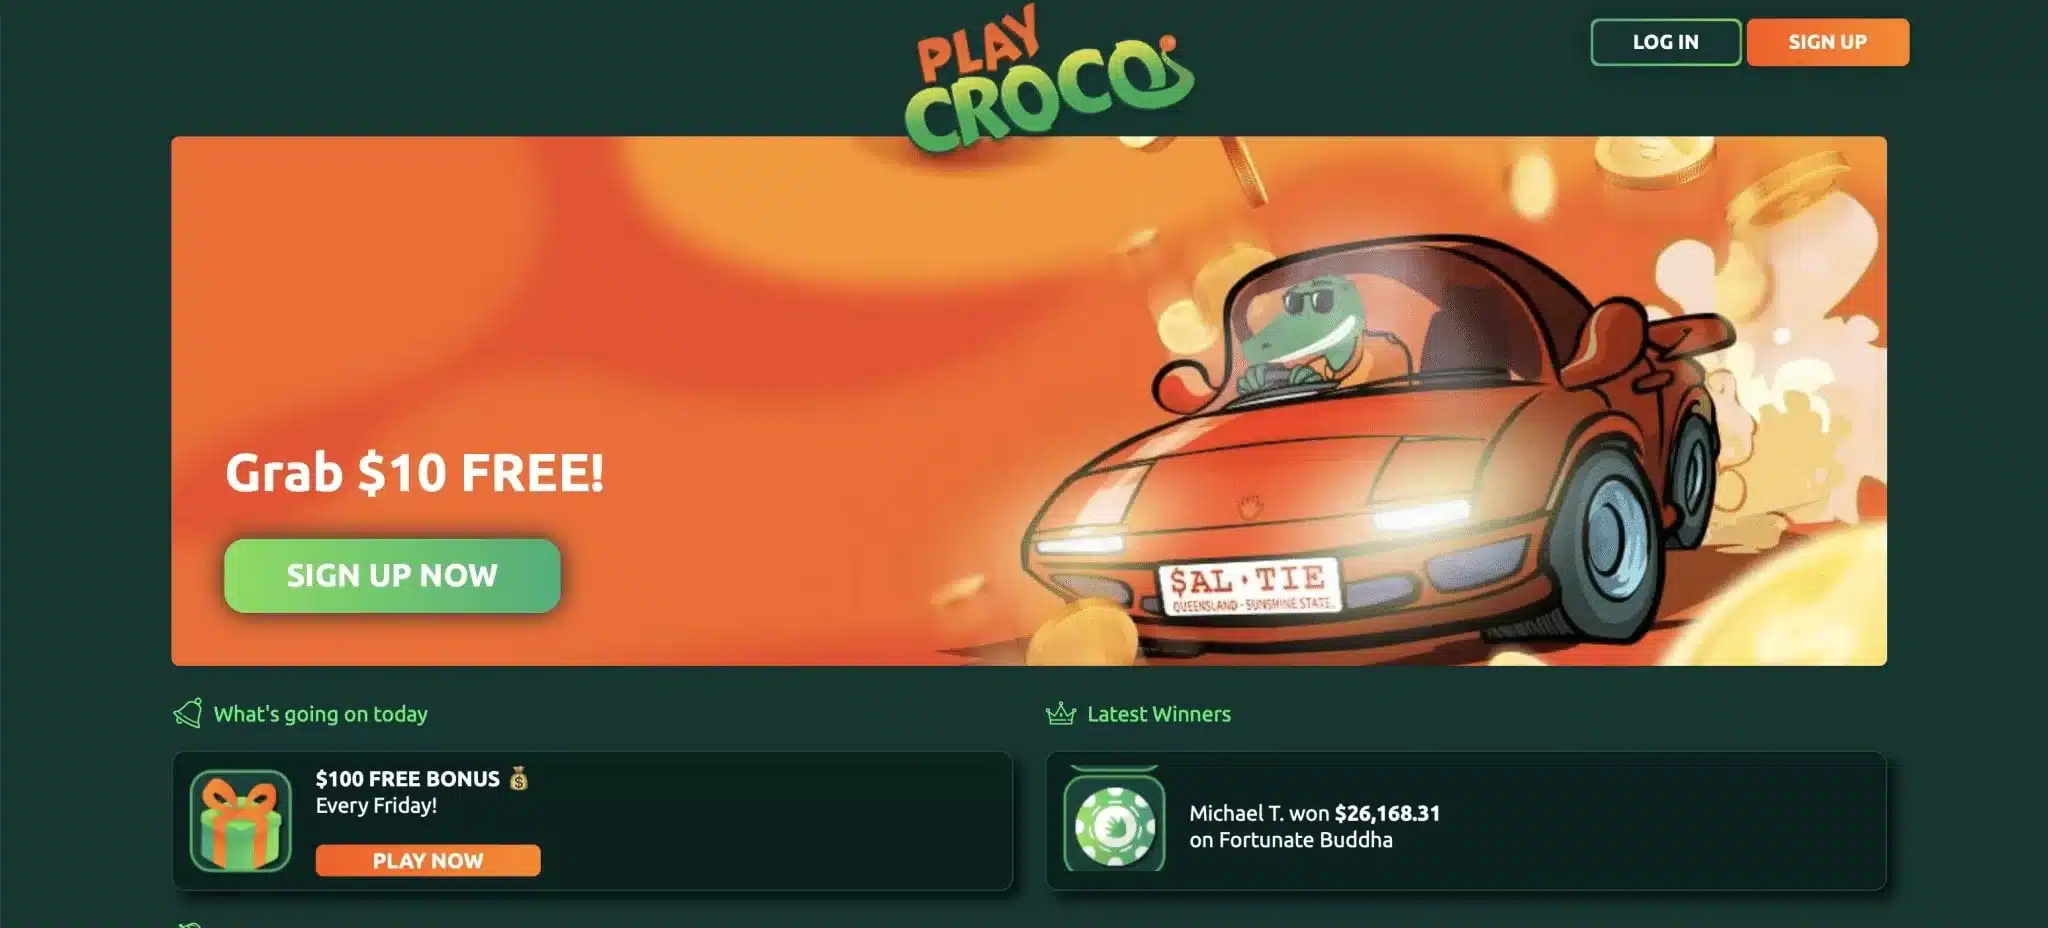 PlayCroco sida 1 visar inloggning samt casino temat